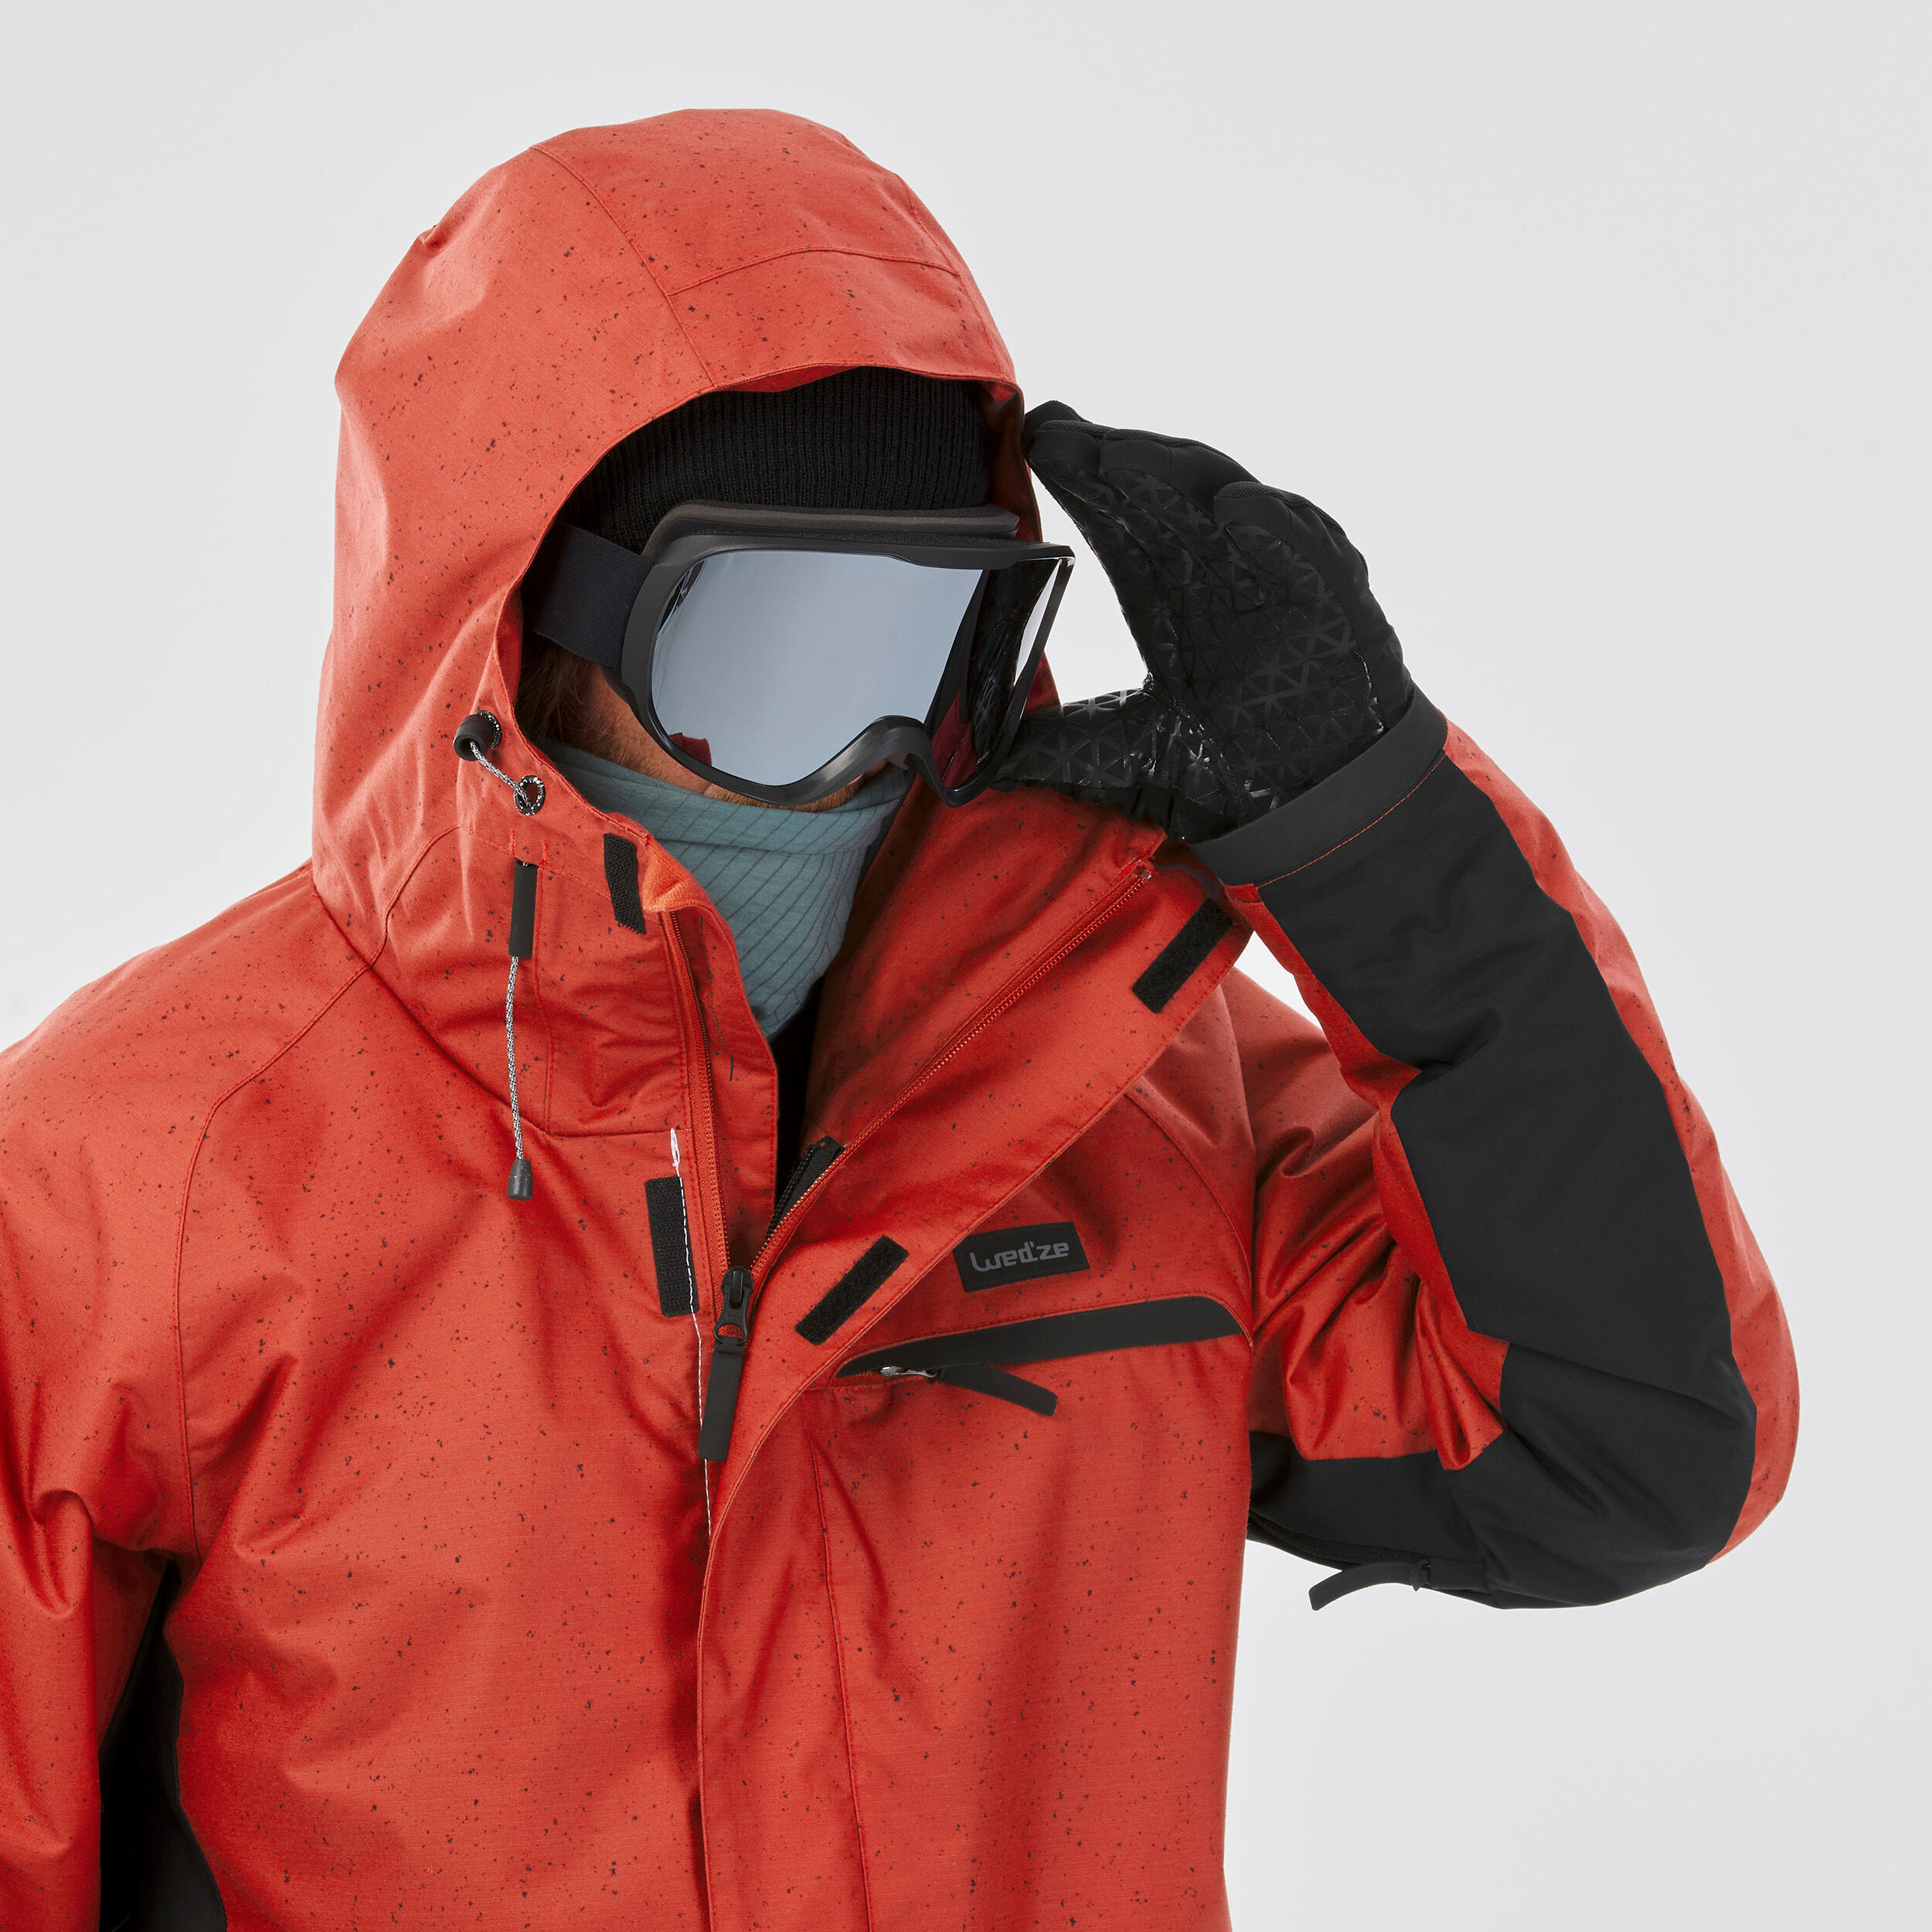 Men's Snowboard Jacket - SNB 100 Red 5/13